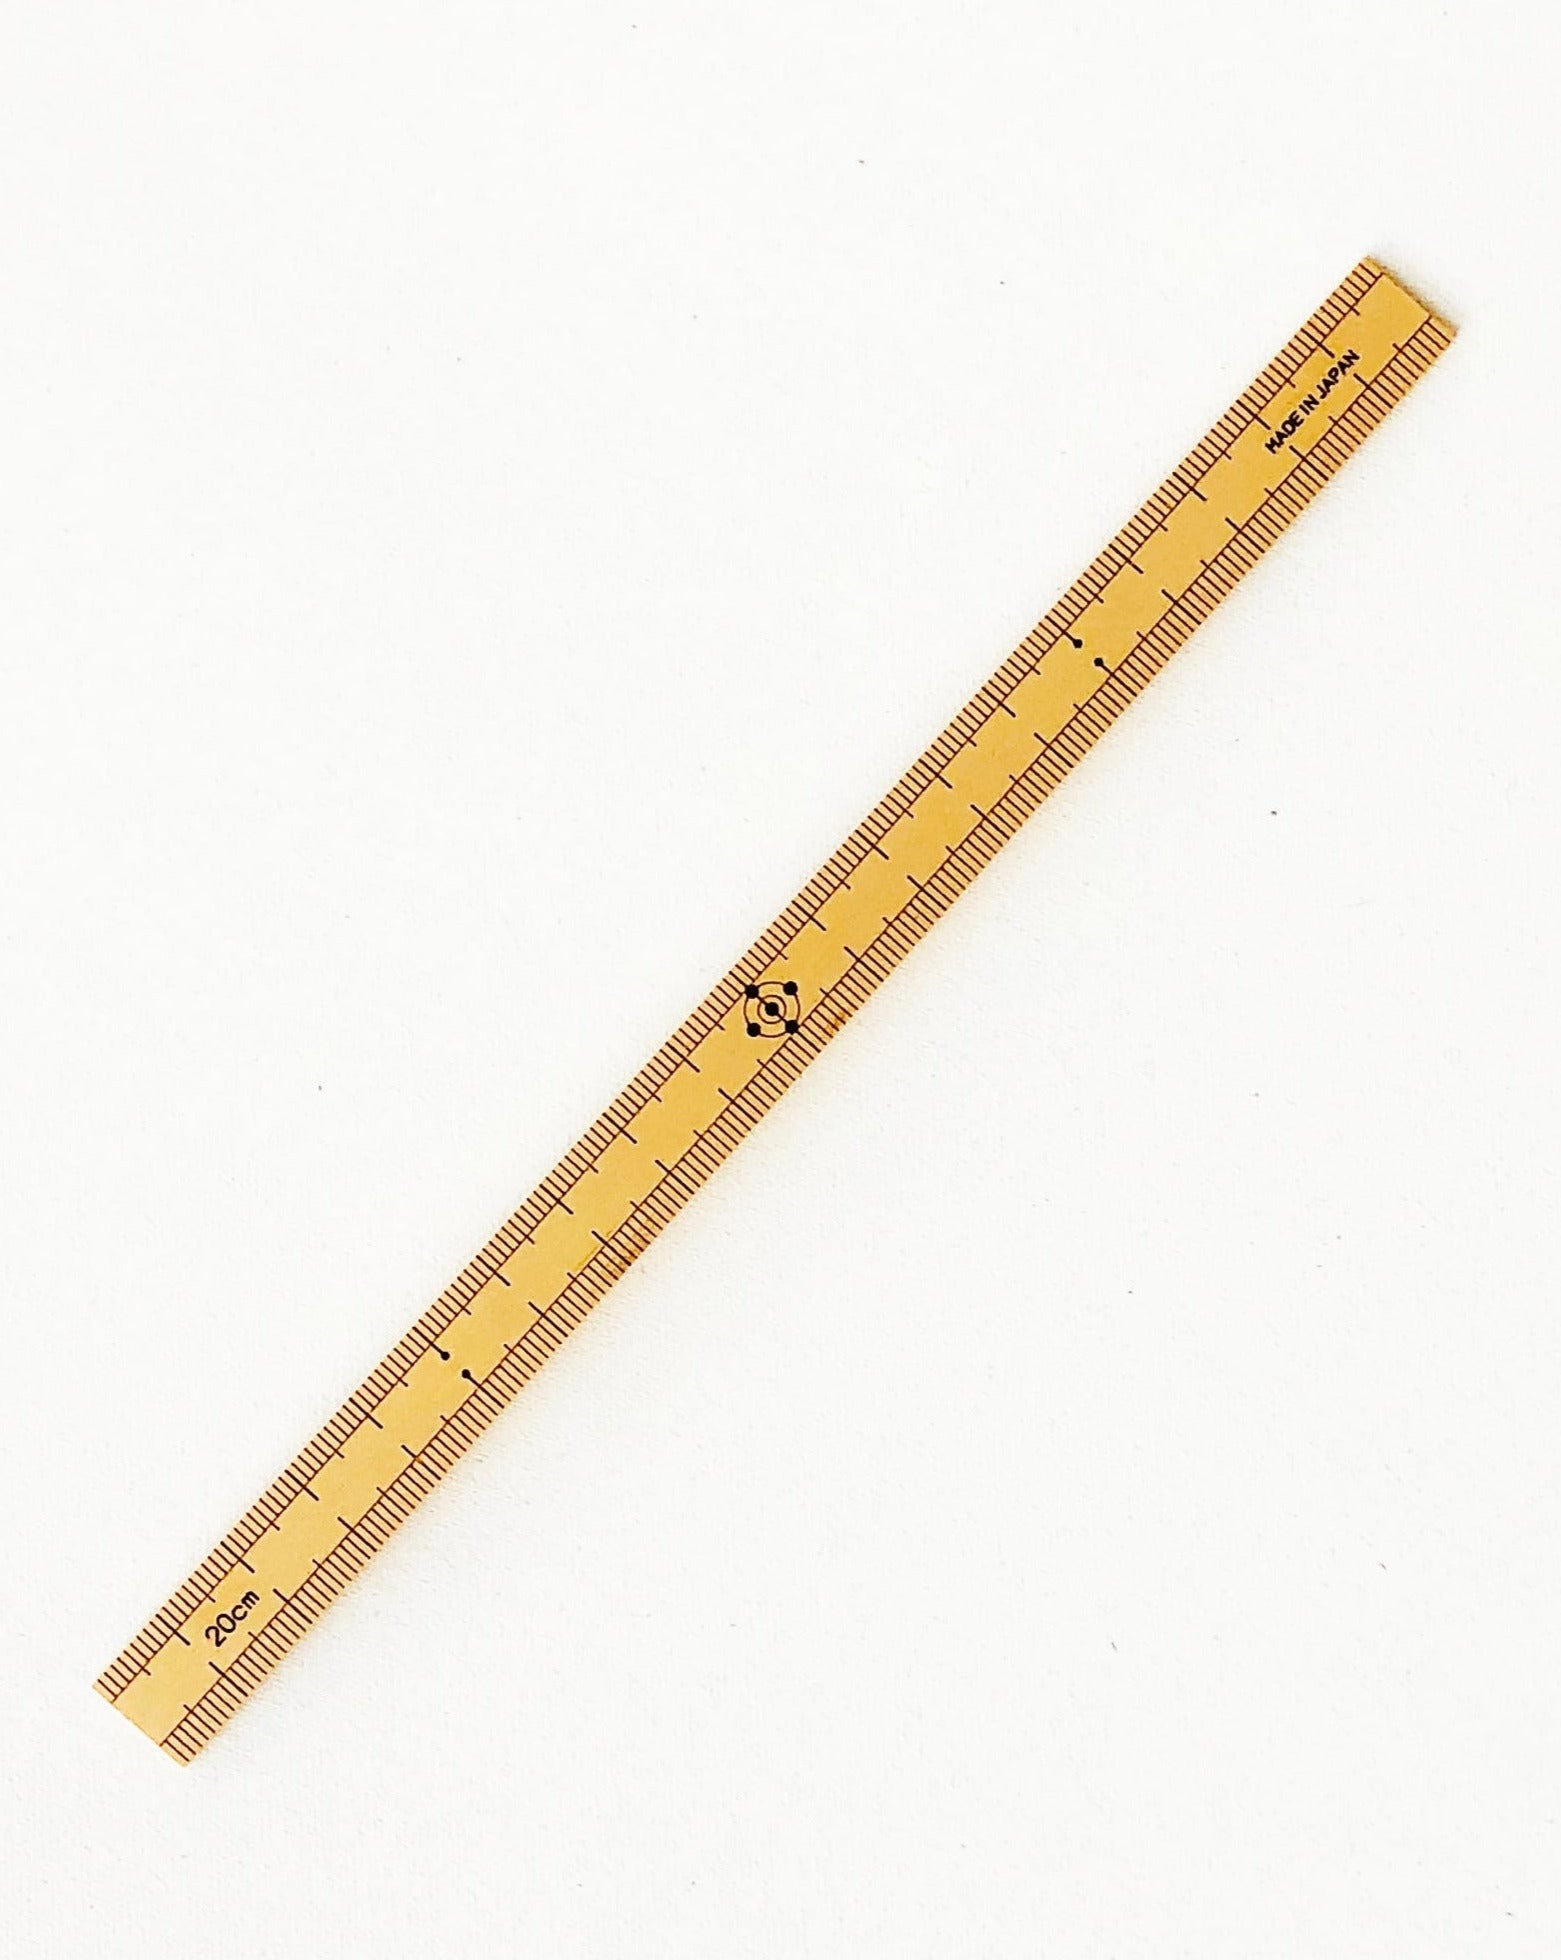 Bamboo Clothing Measuring Tape  Measuring Ruler Sewing Tailor